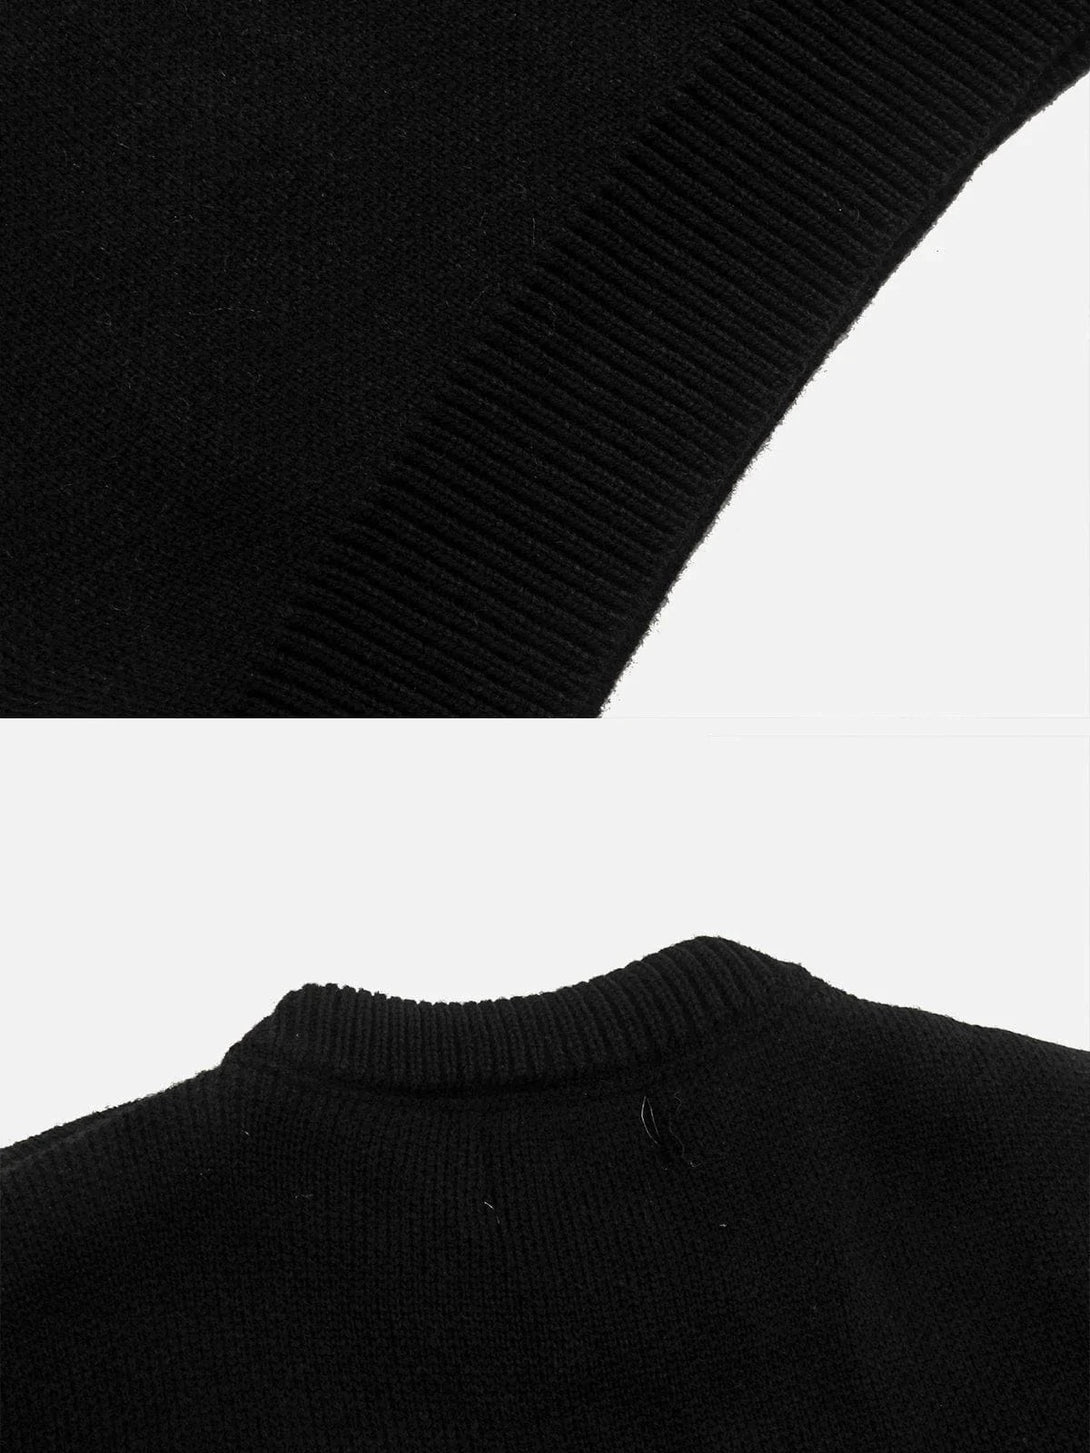 Majesda® - Pentagram Patchwork Sweater outfit ideas streetwear fashion